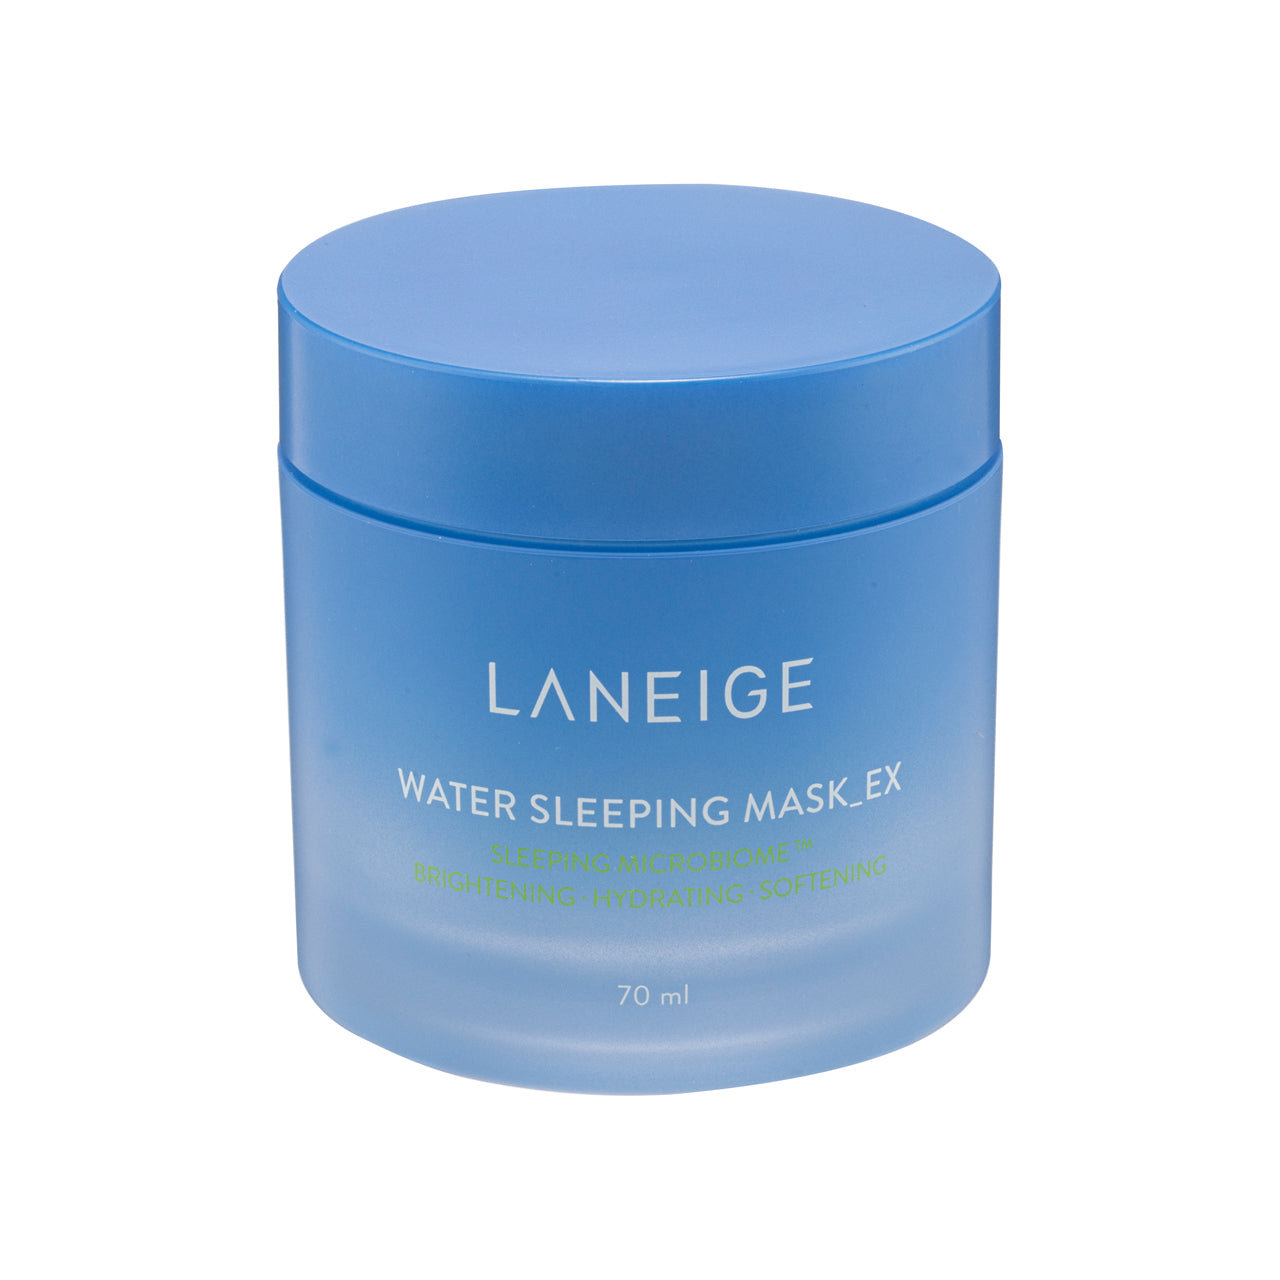 LANEIGE Water Sleeping Mask EX 70ml | Sasa Global eShop